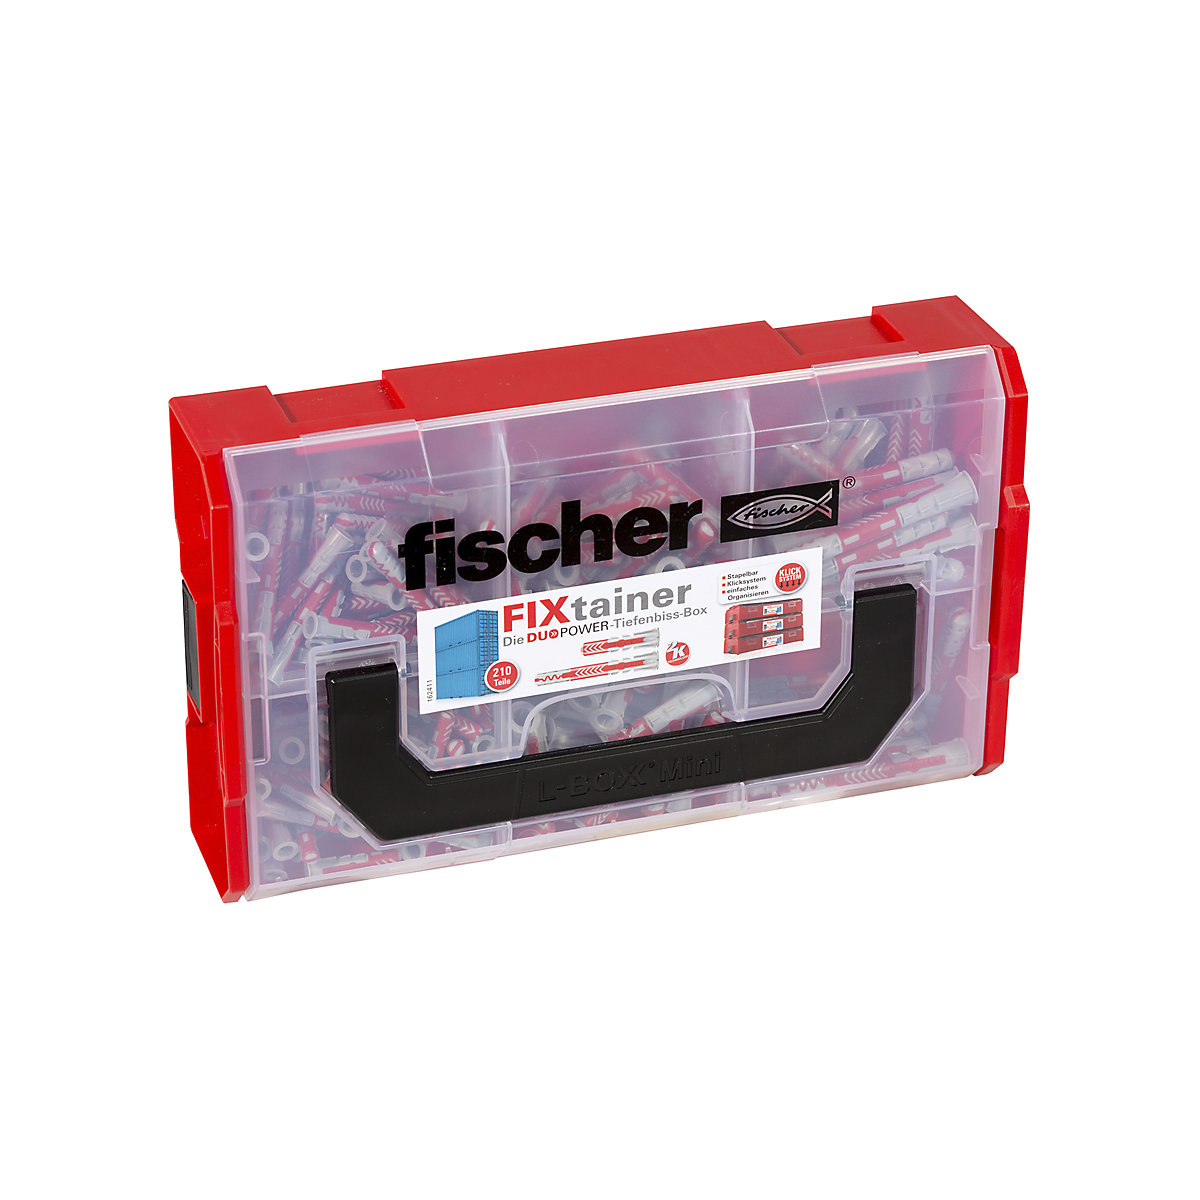 FixTainer – DUOPOWER Tiefenbiss-Box fischer